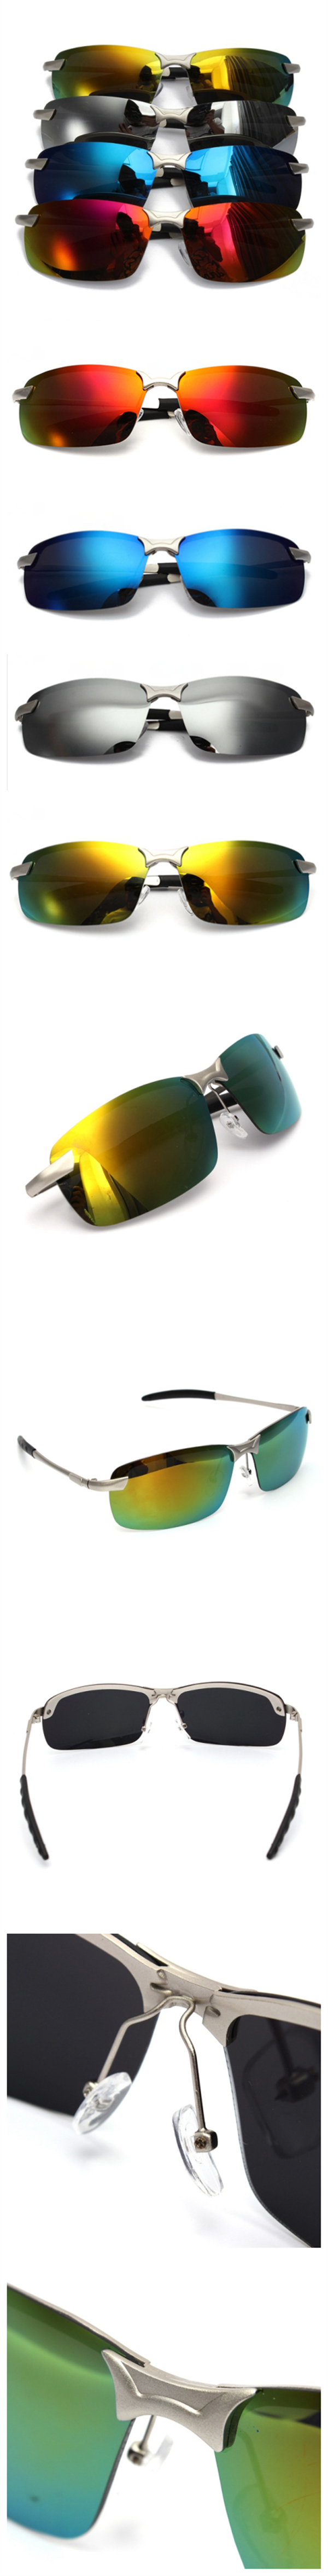 Outdoor-Cycling-Anti-Color-Brilliance-Film-Polarized--Sunglasses-950570